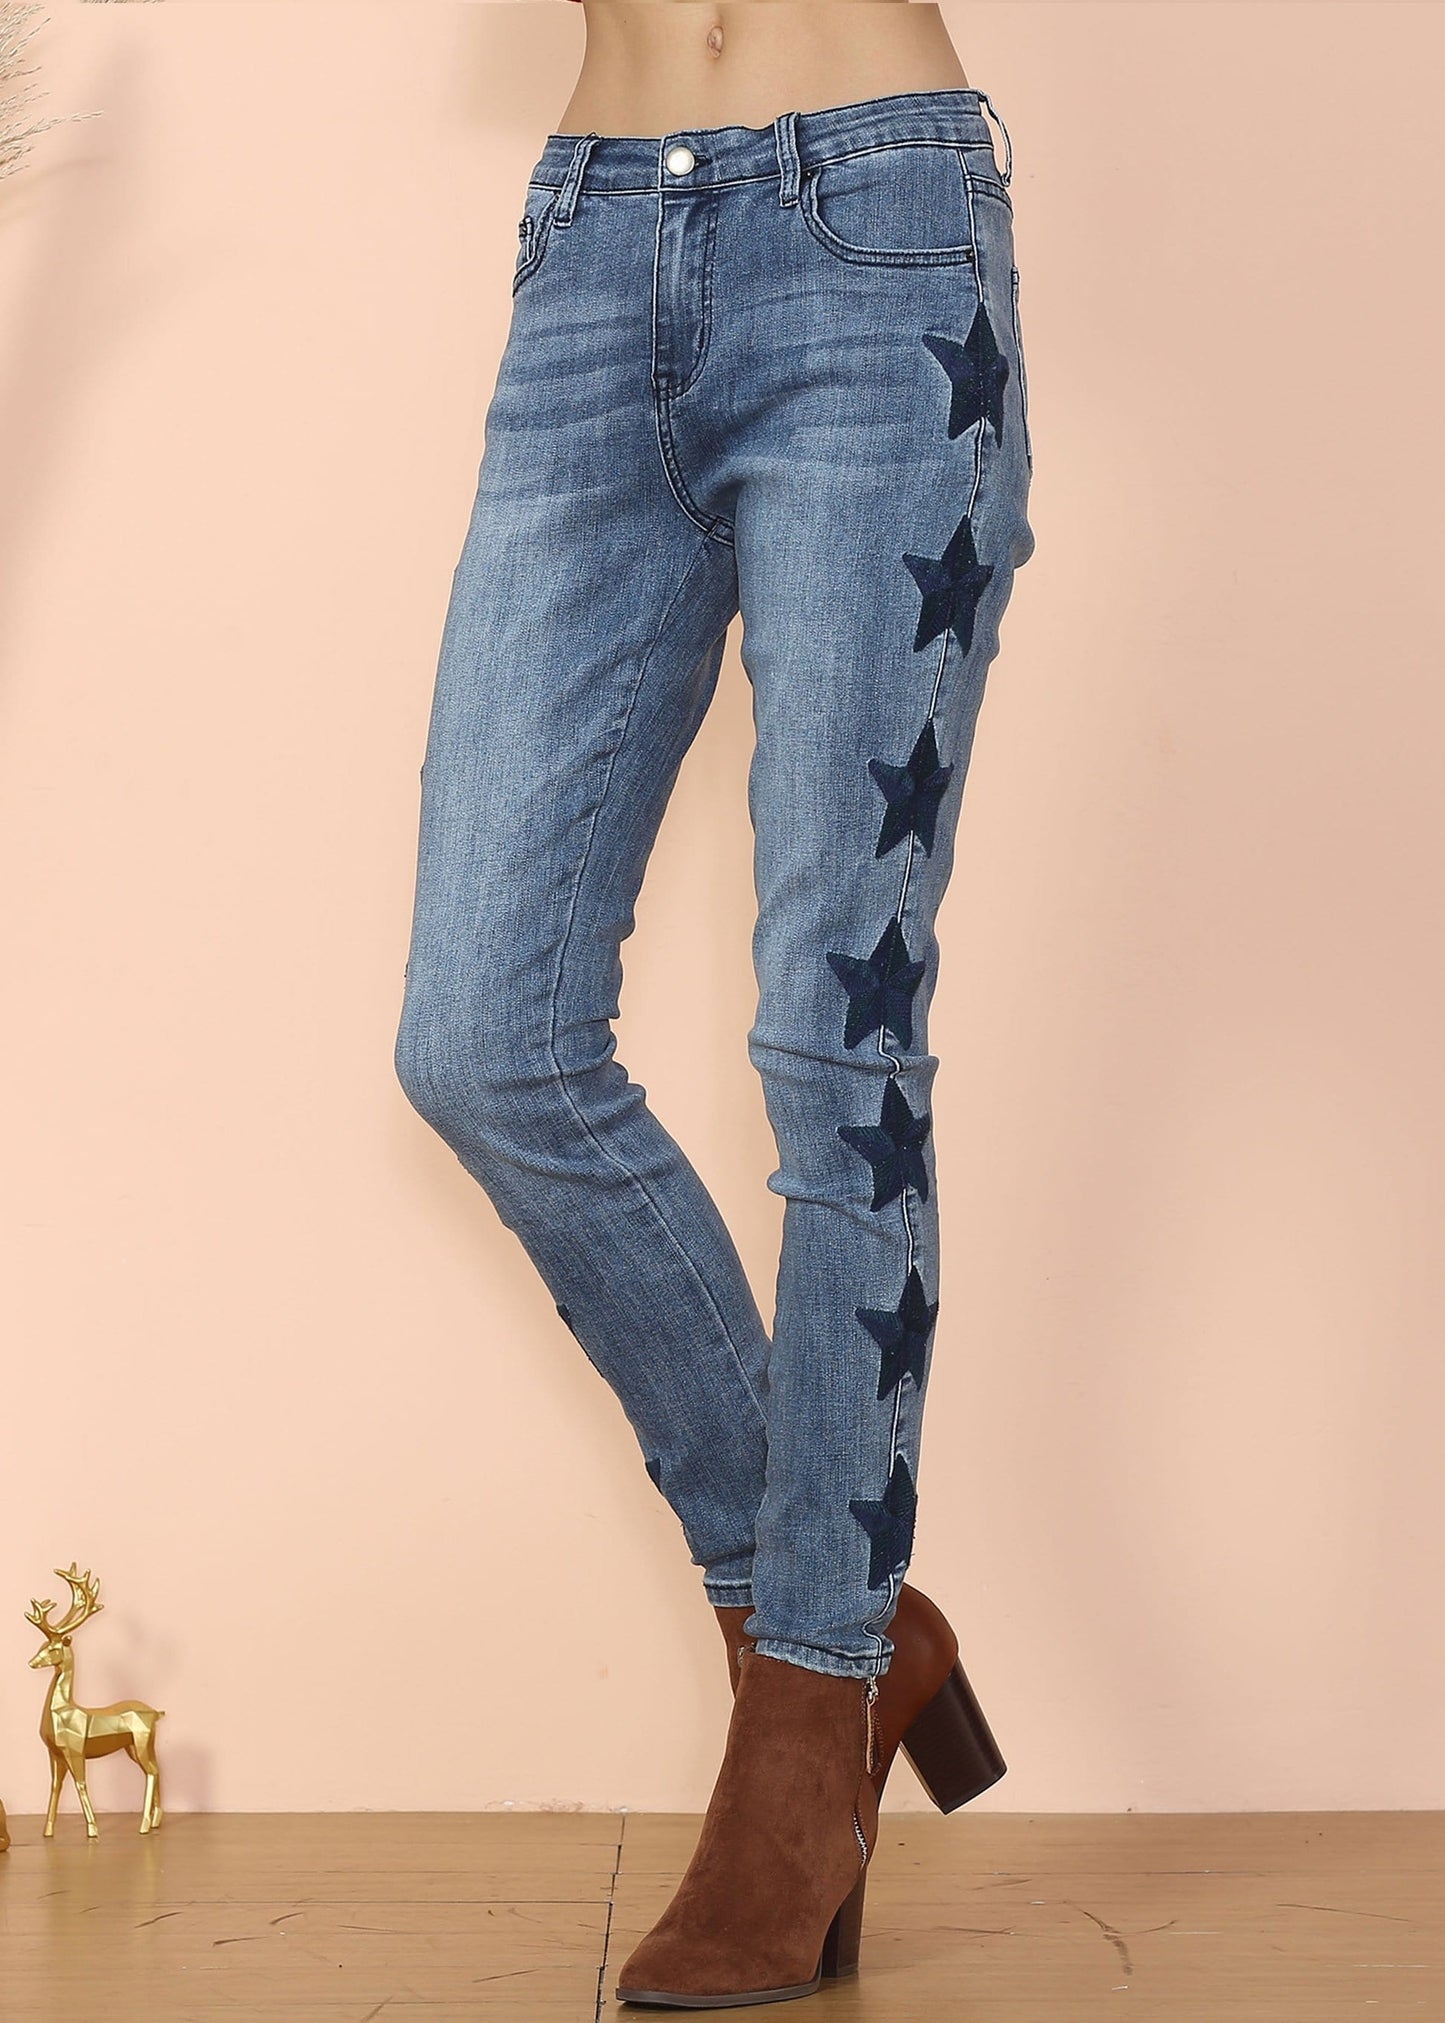 Star Side Print Skinny Jeans